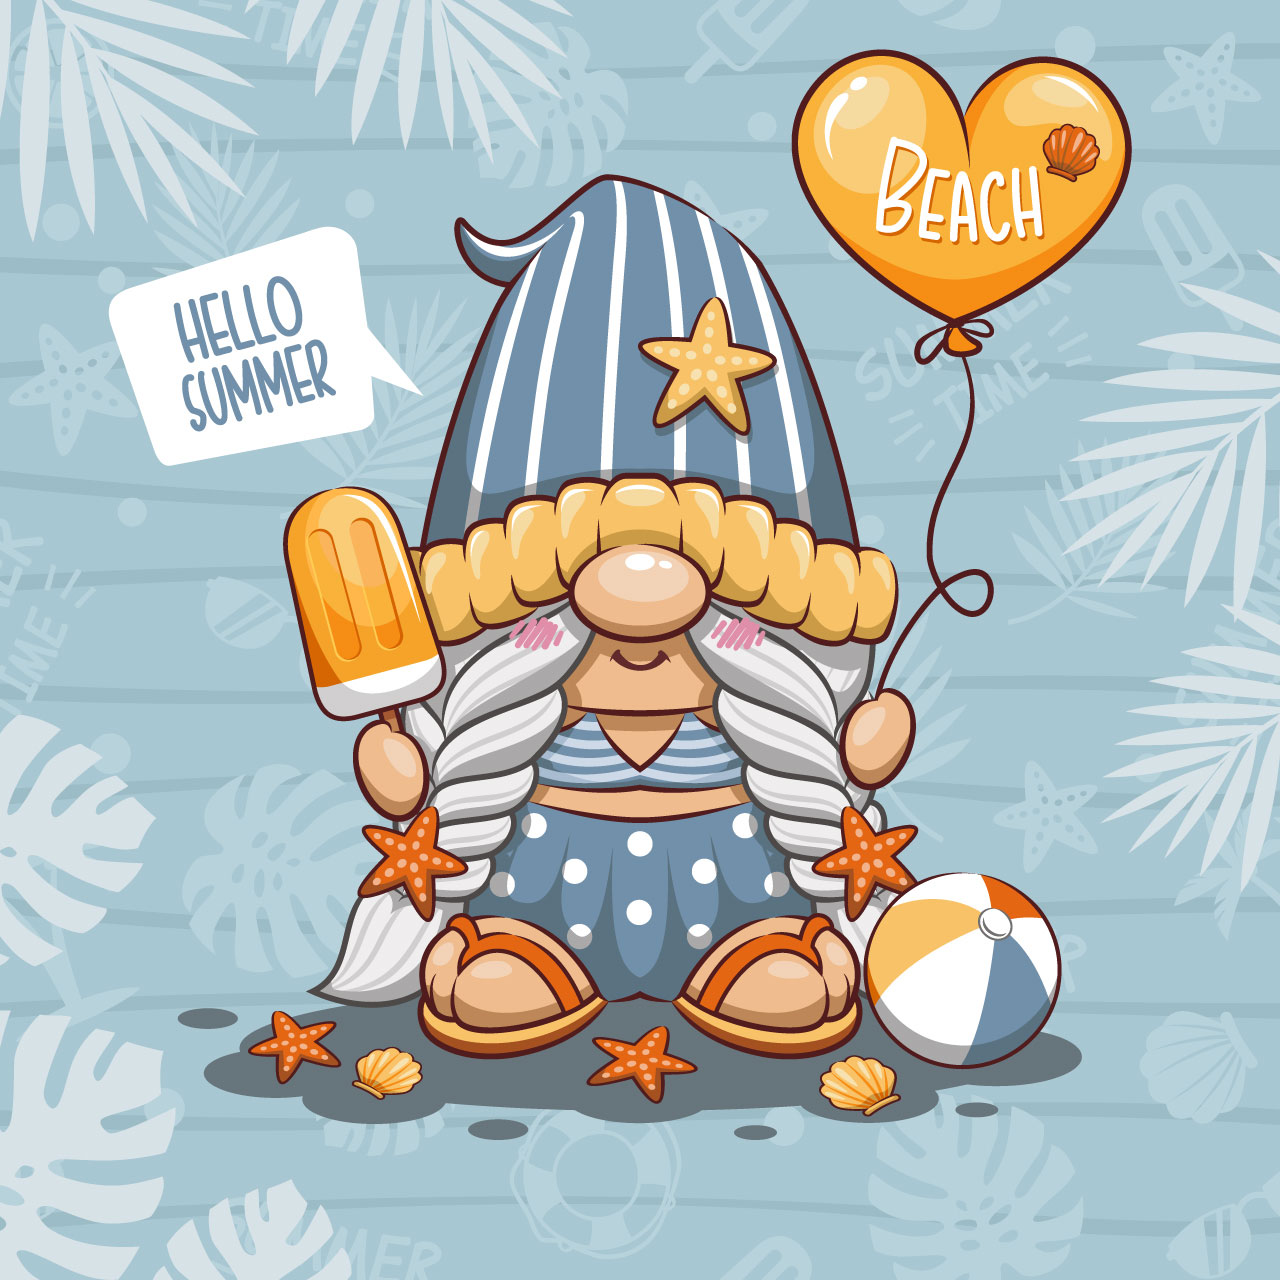 Hello summer cute gnome with ice cream ball balloon blue background cartoon illustration image